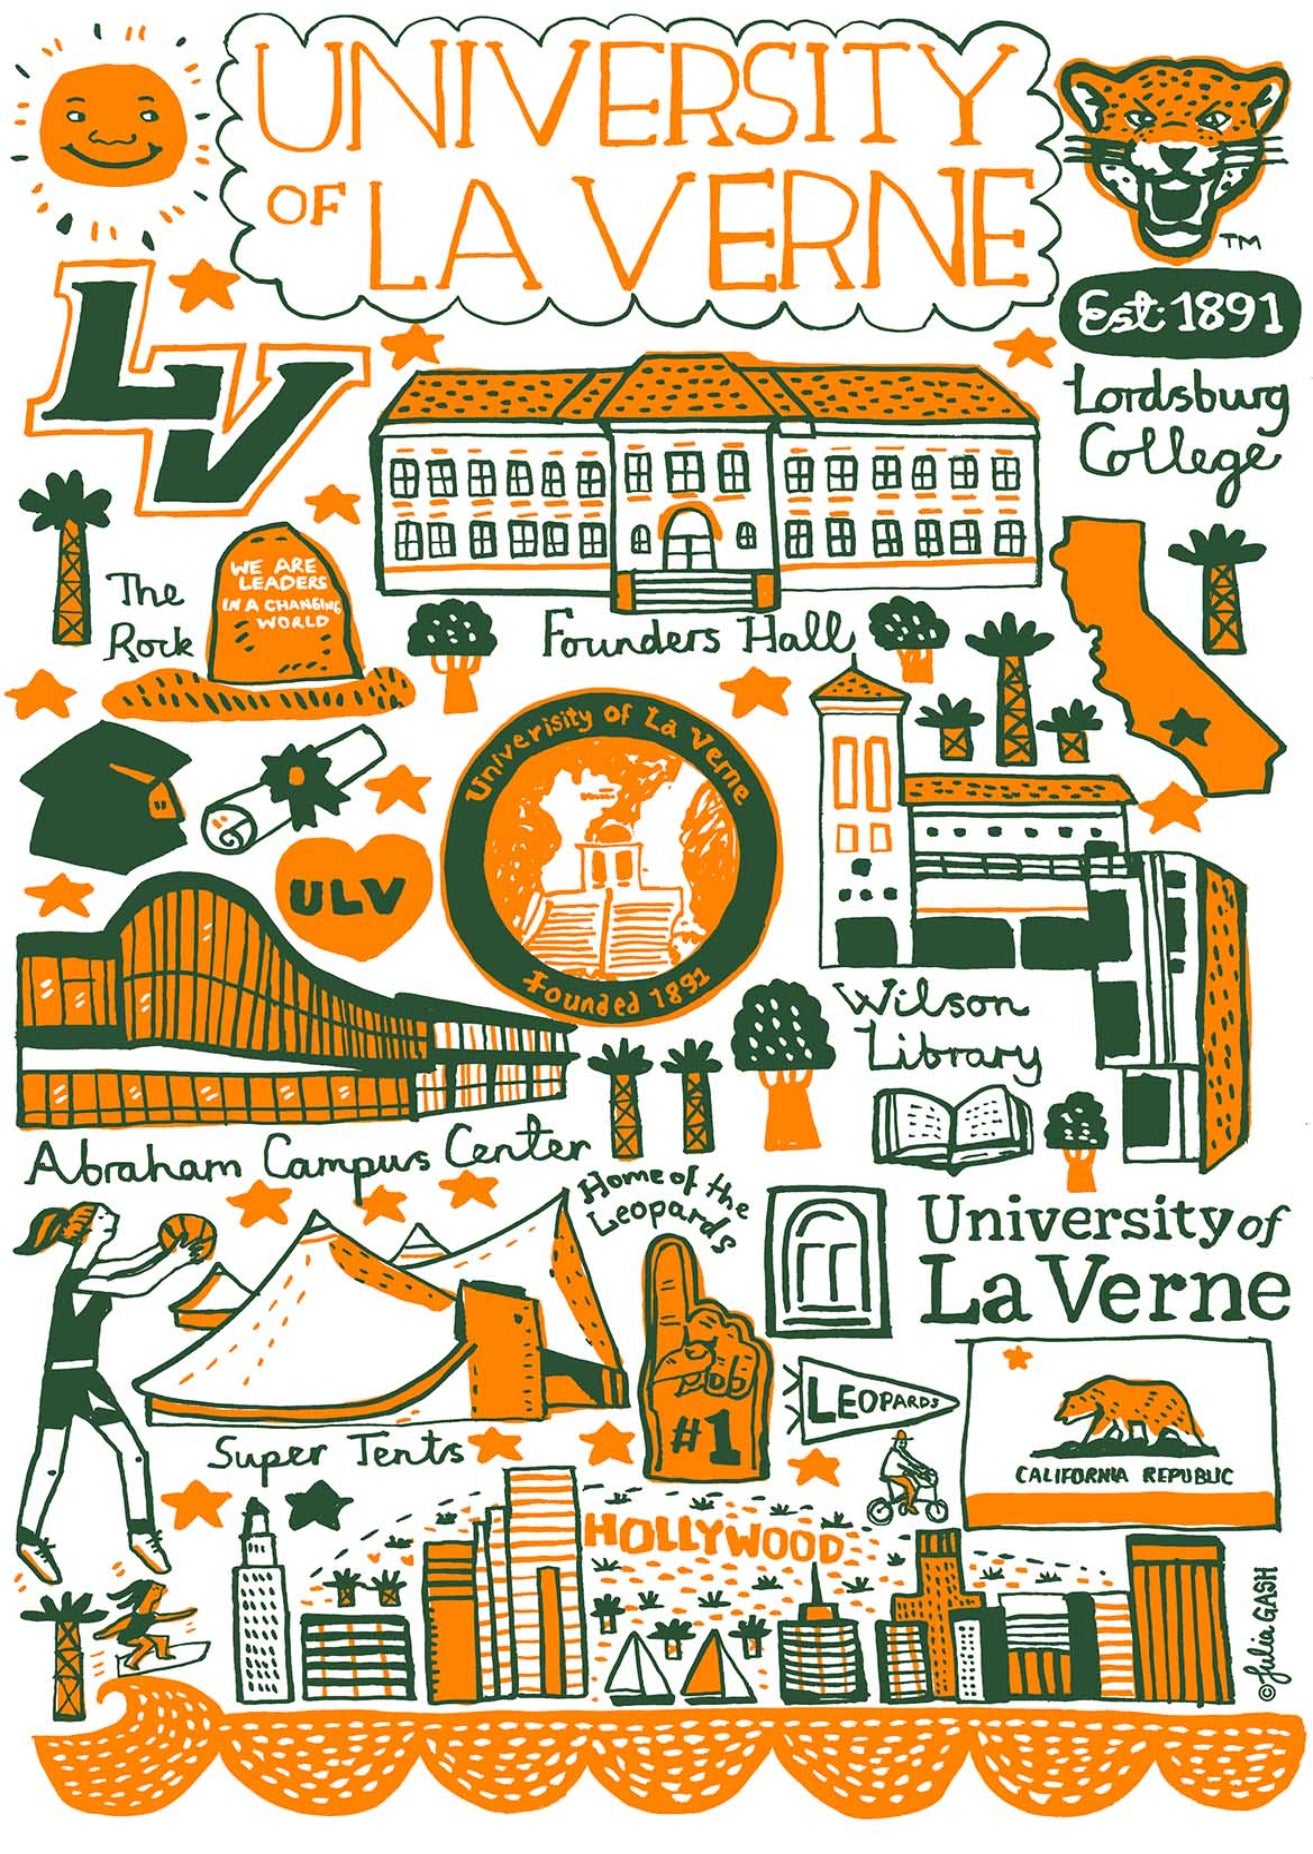 University of La Verne by Julia Gash